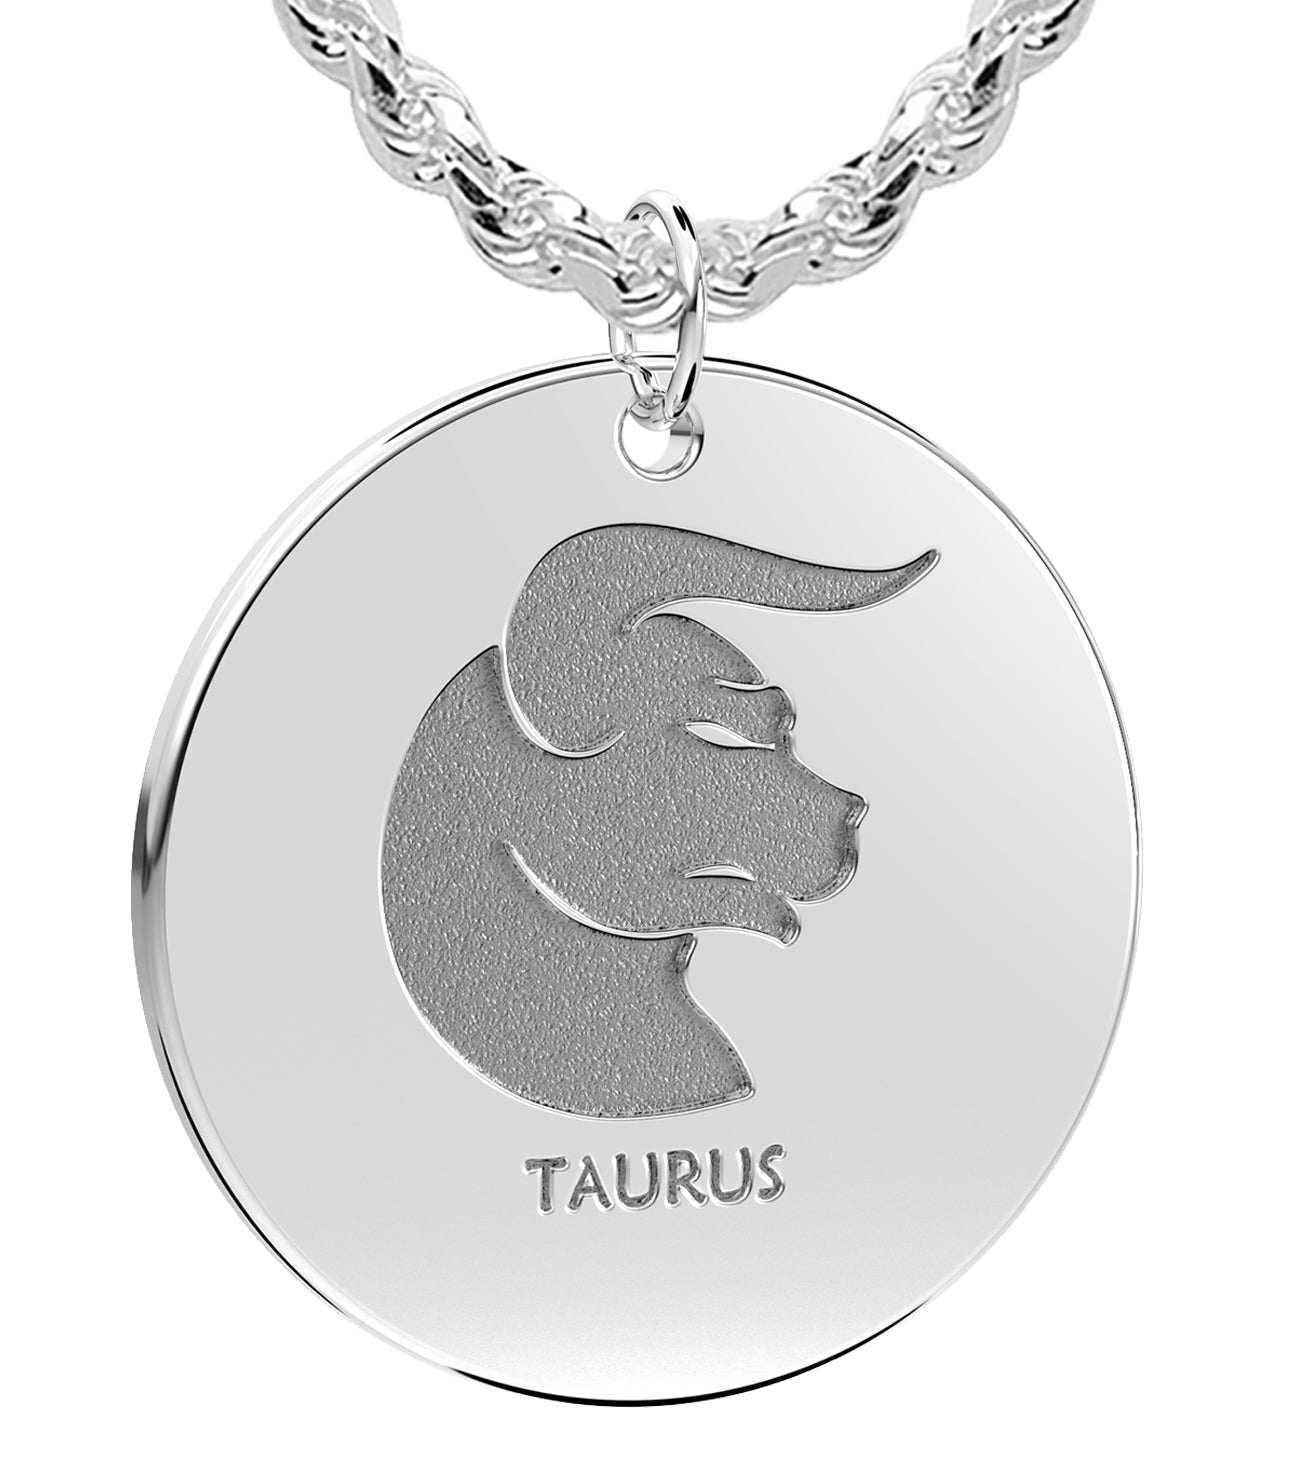 Amazon.com: Rebecca Anne Handmade Jewelry Rose Gold Taurus Necklace, 16